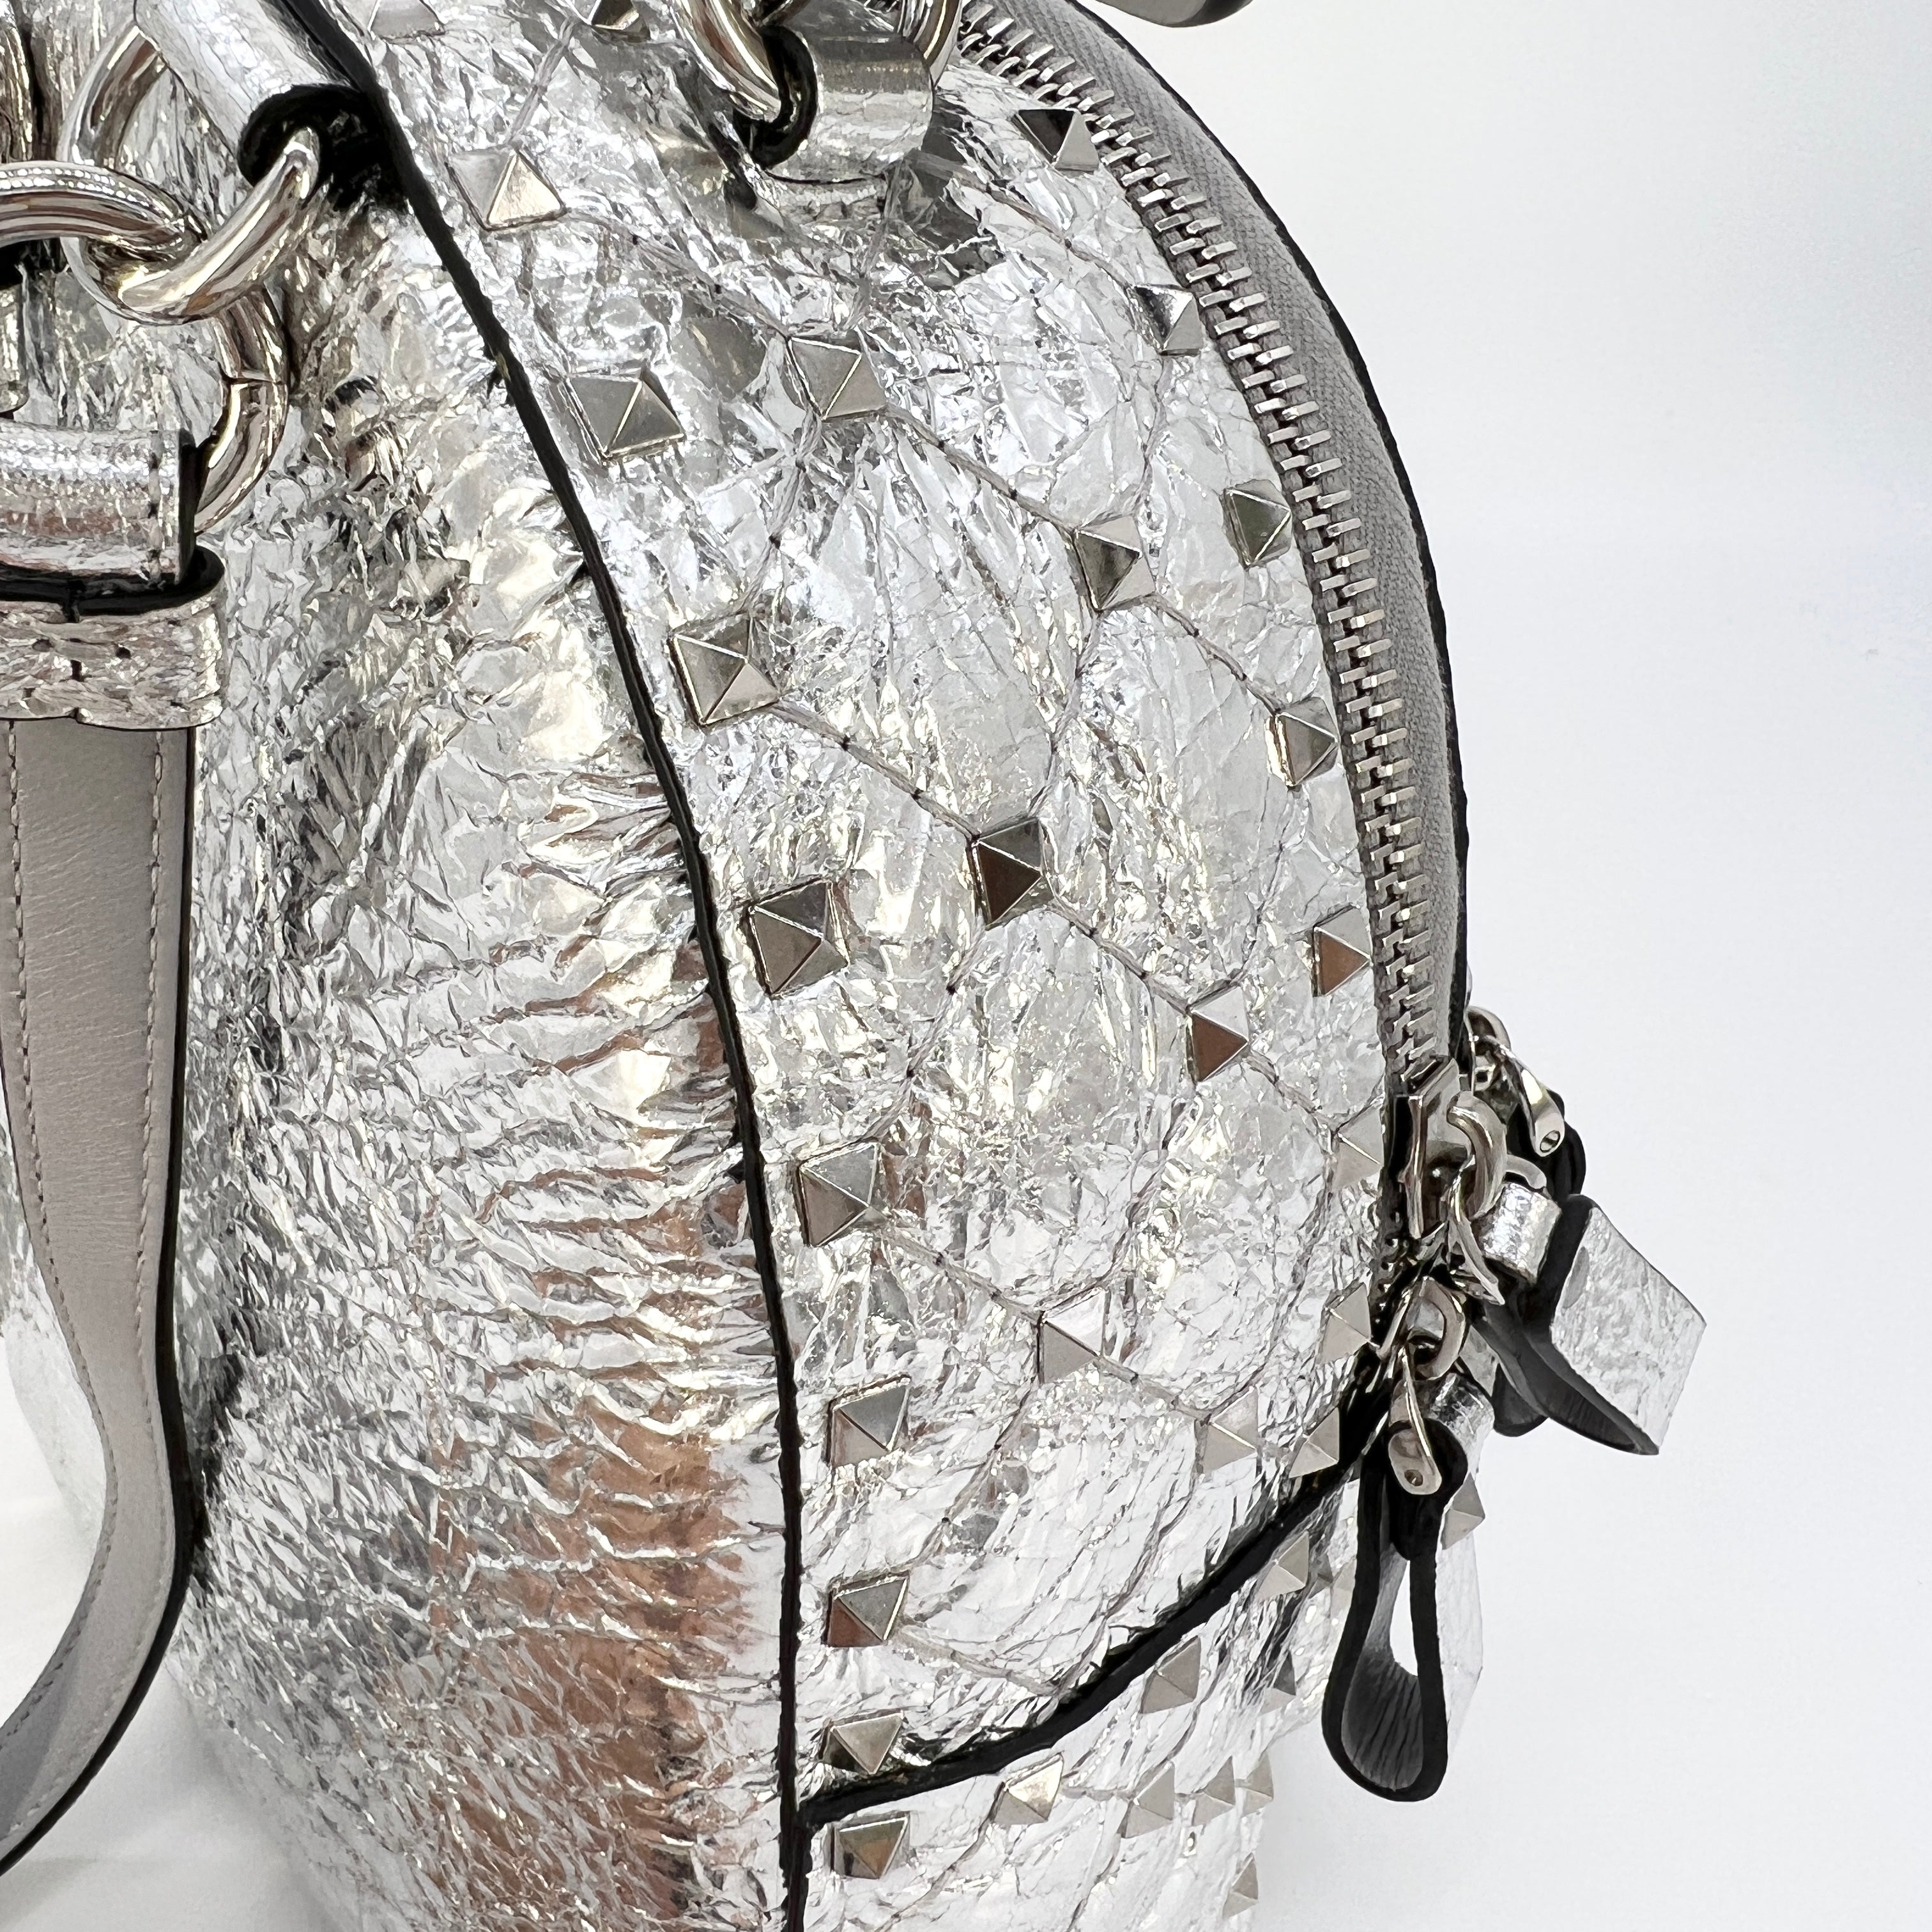 Rockstud spike leather backpack Valentino Garavani Beige in Leather -  8101351